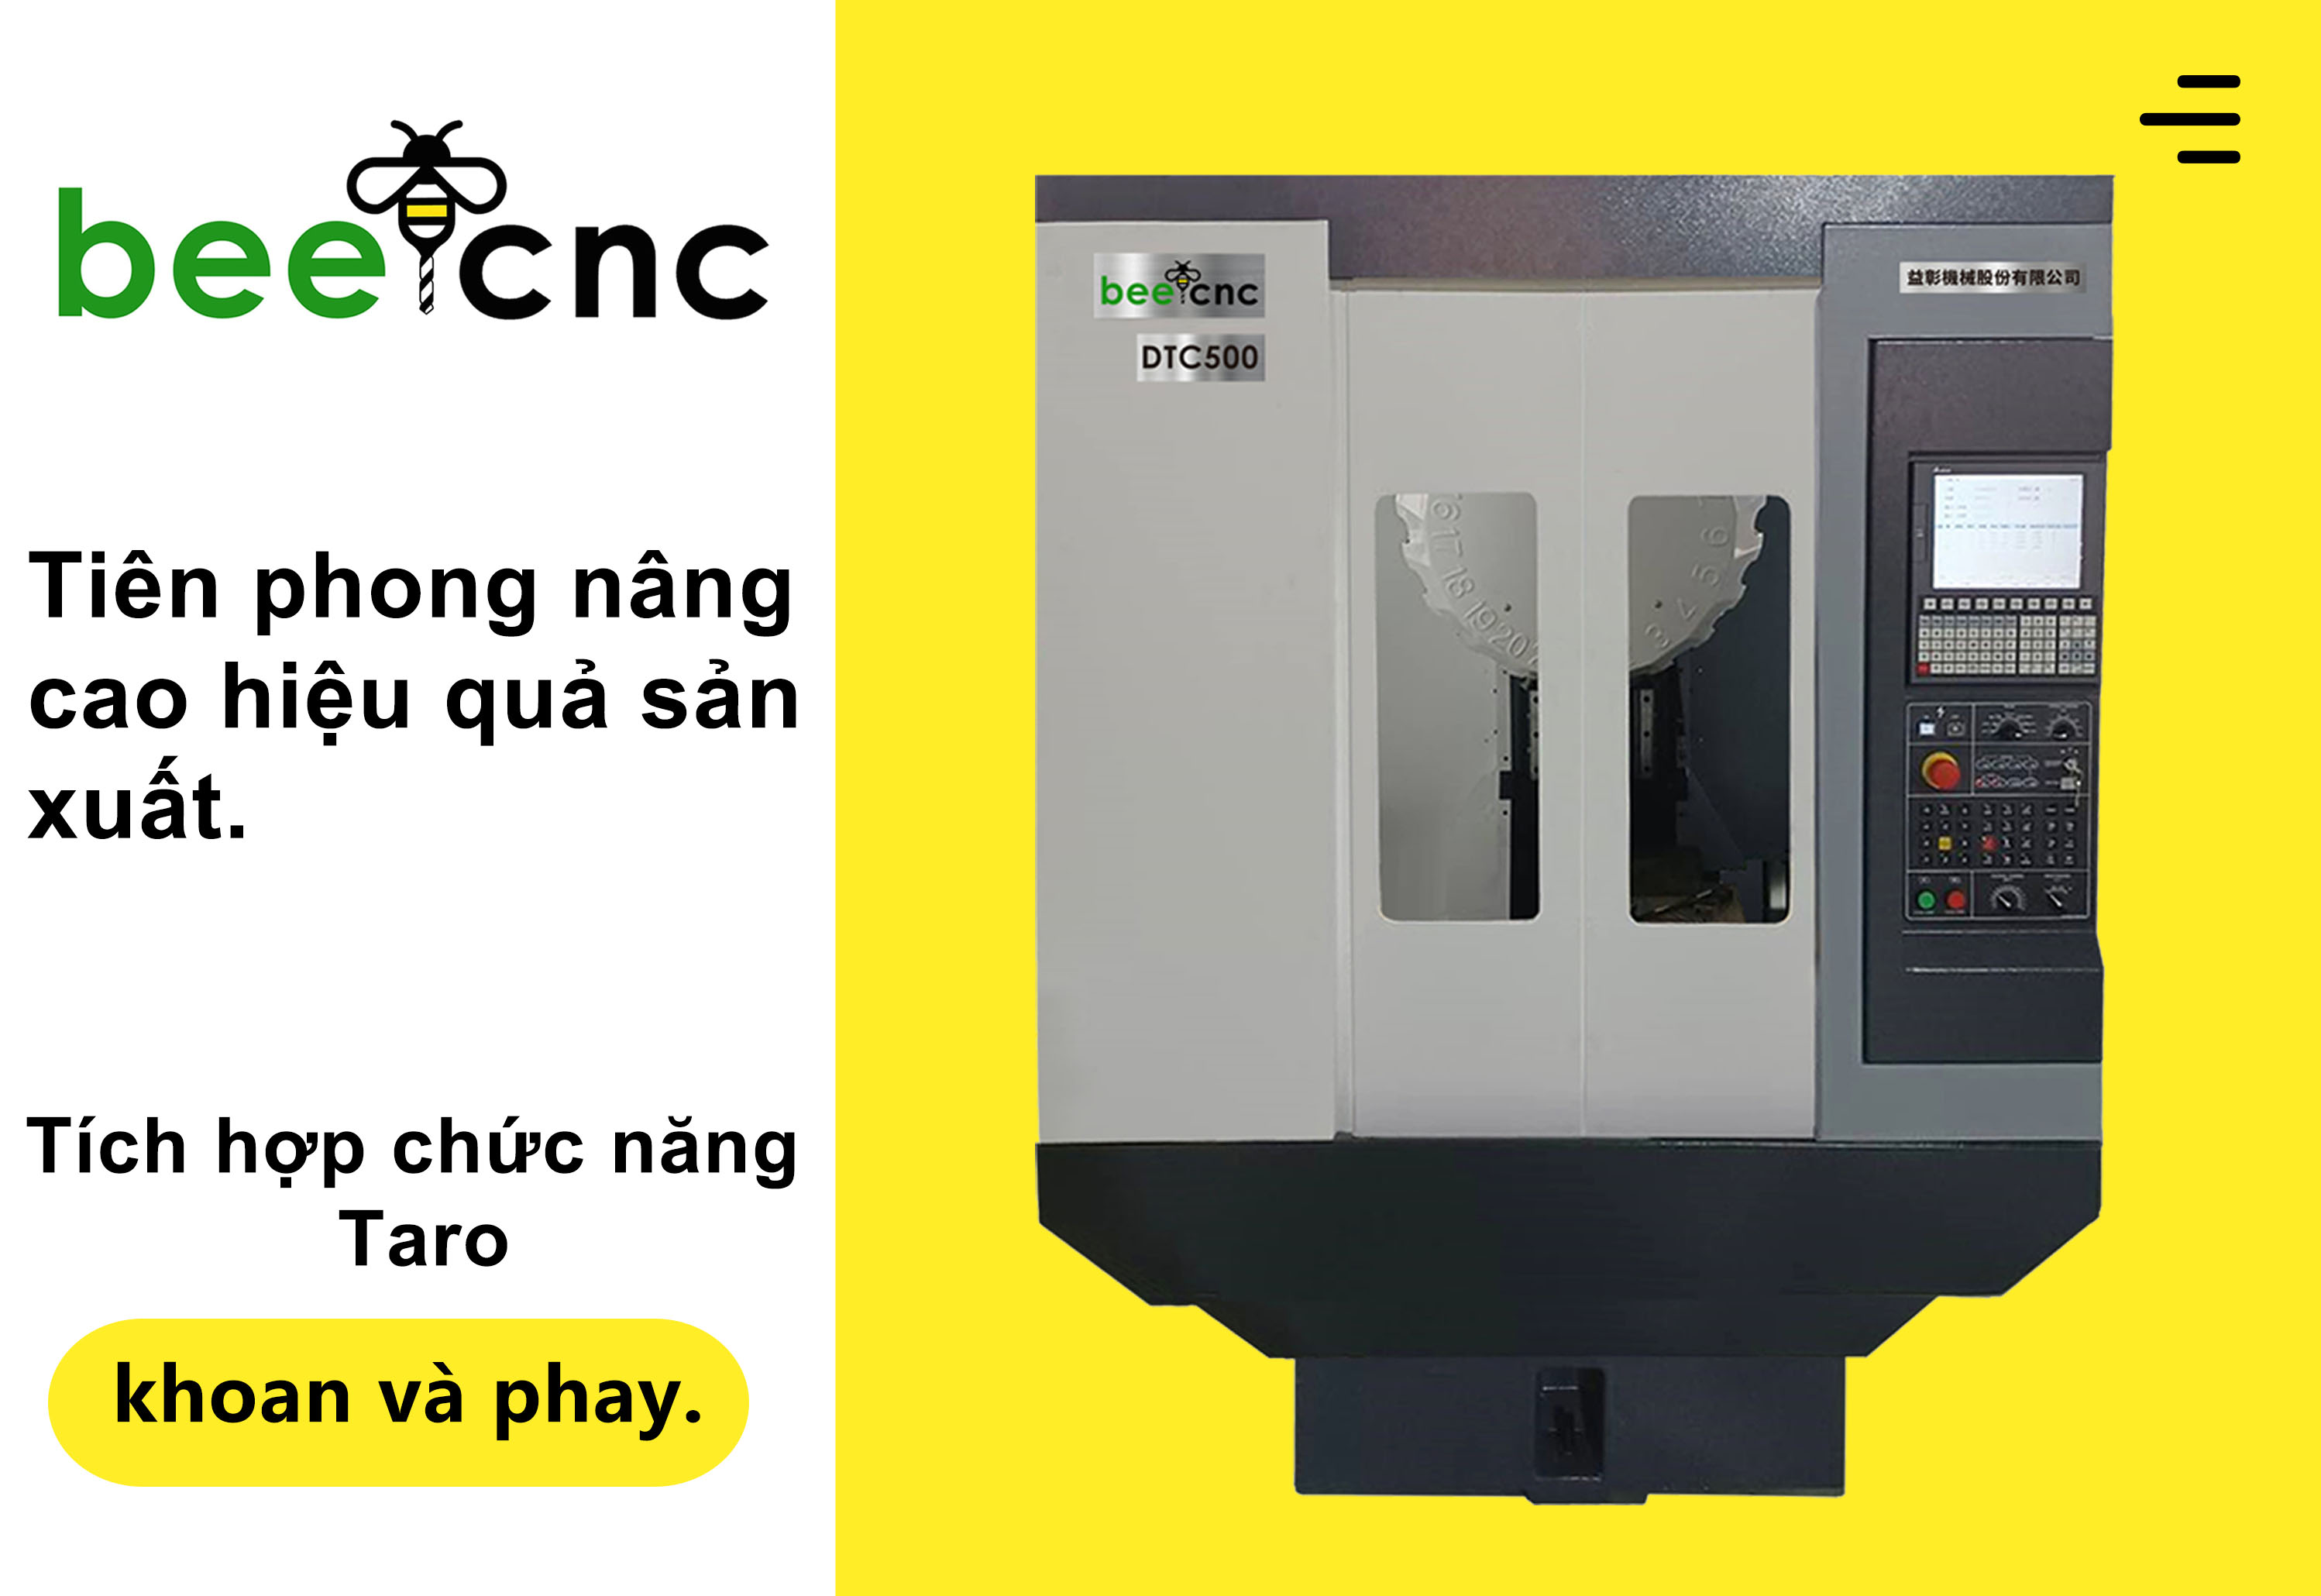 cnc machine